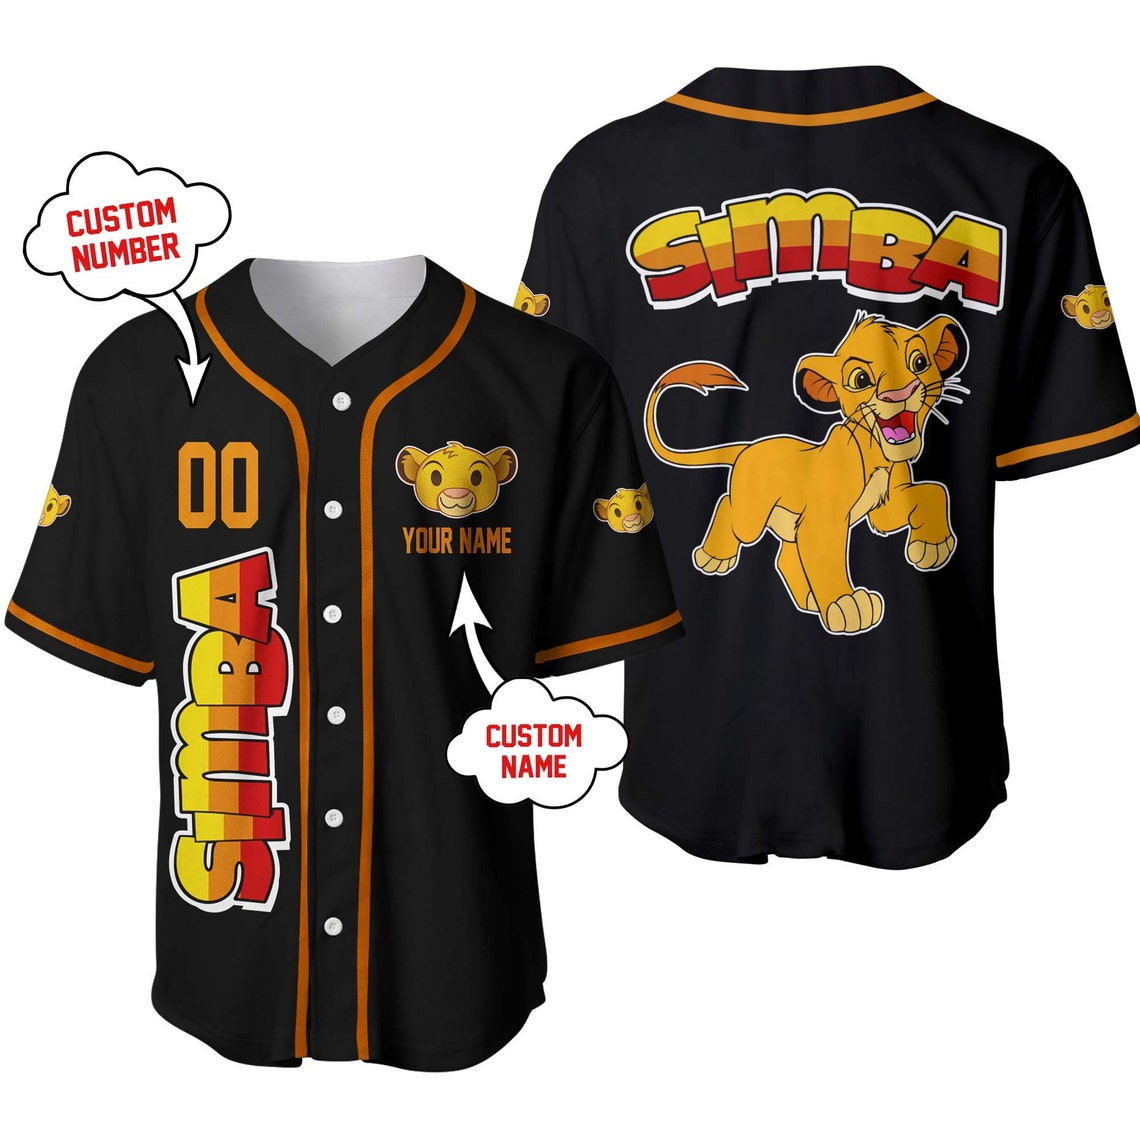 Simba Lion King Black Yellow Red Ombre Disney Unisex Cartoon Custom Baseball Jersey Personalized Shirt Men Women